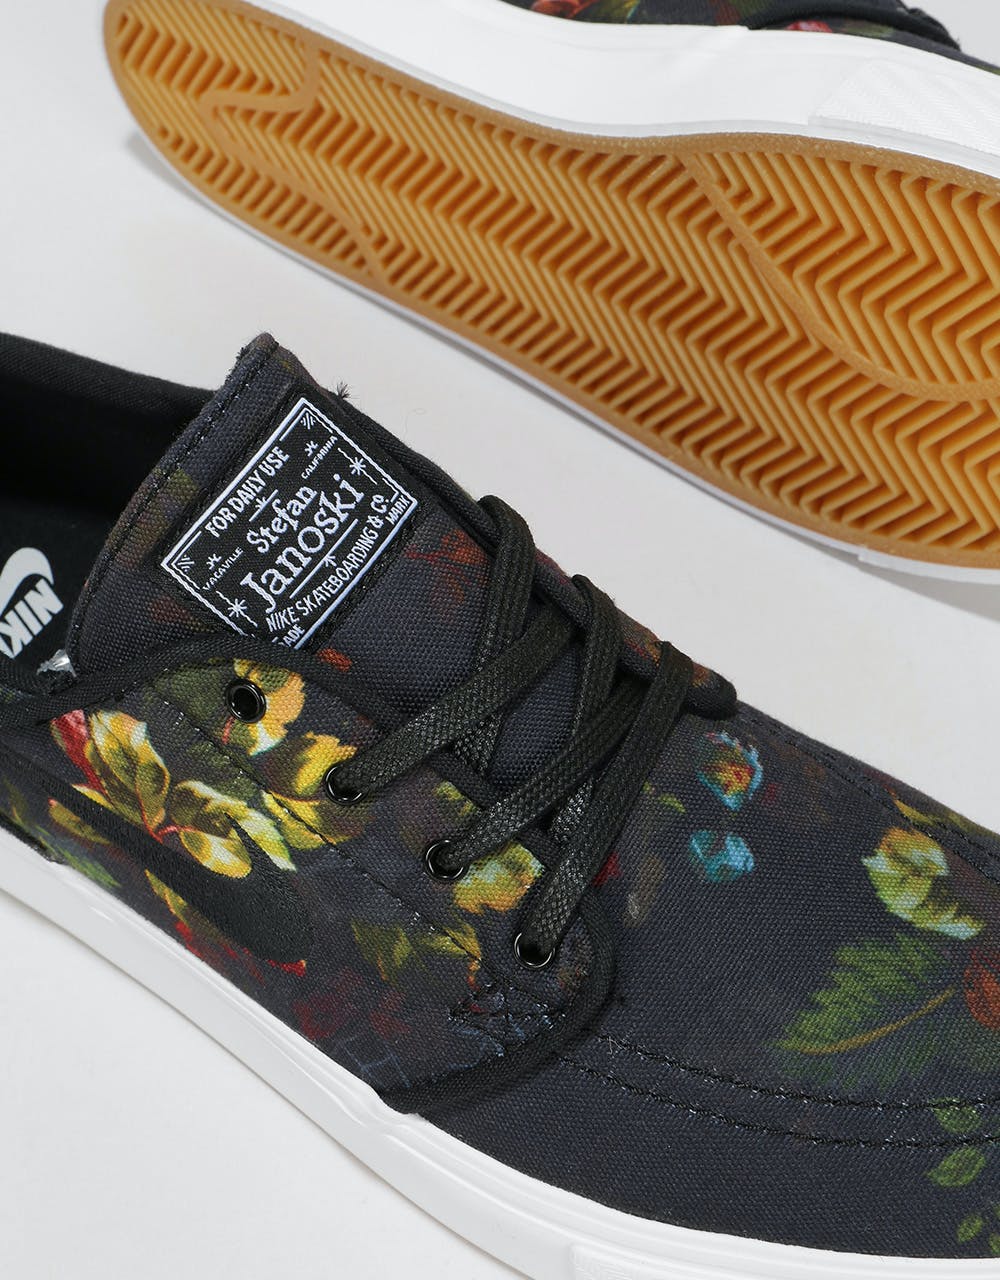 Nike SB Zoom Stefan Janoski Skate Shoes - Multi-Color/Black-White-Gum